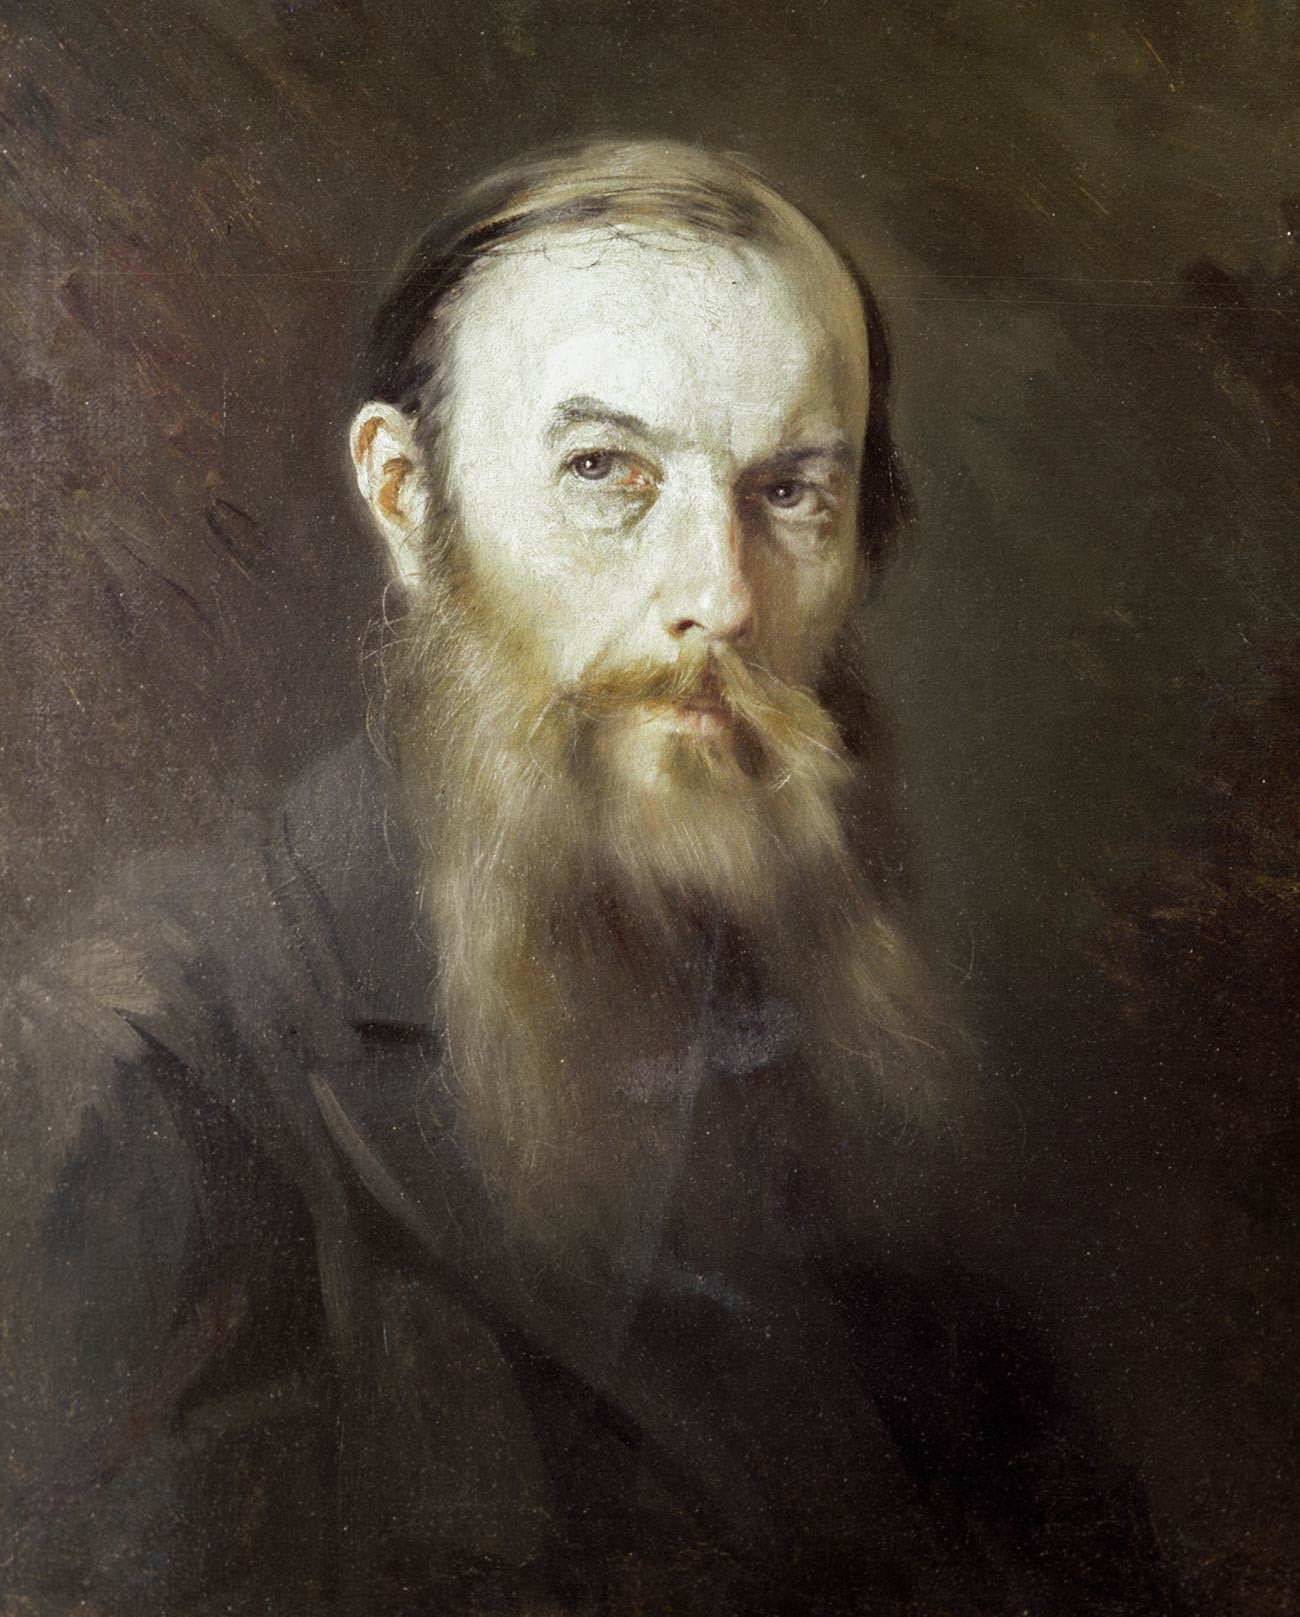 Reproduction of the portrait of Fyodor Dostoevsky, by M. Shcherbatov. 